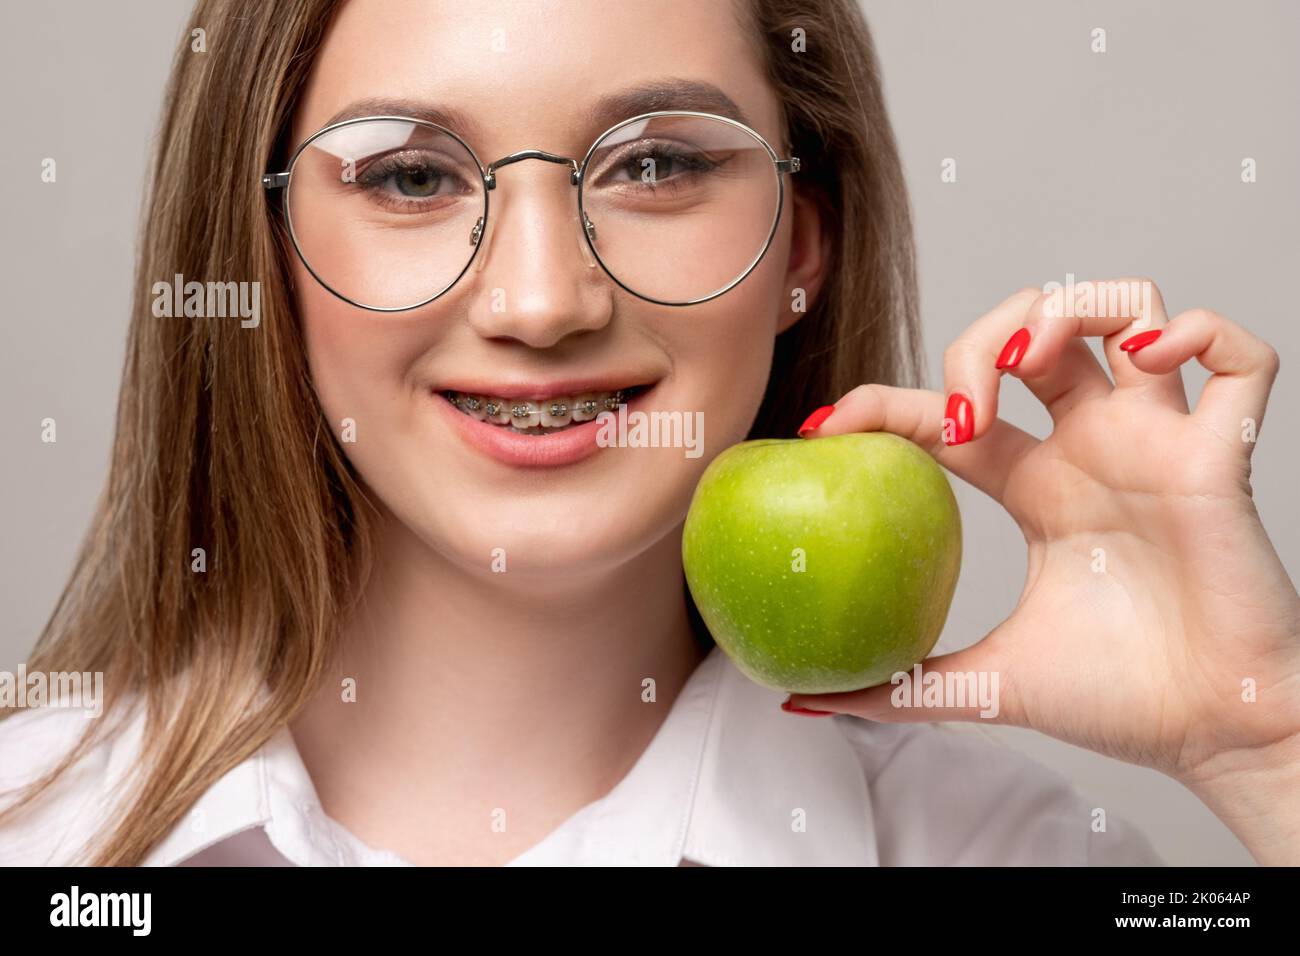 sana alimentazione detox dieta donna mela verde Foto Stock